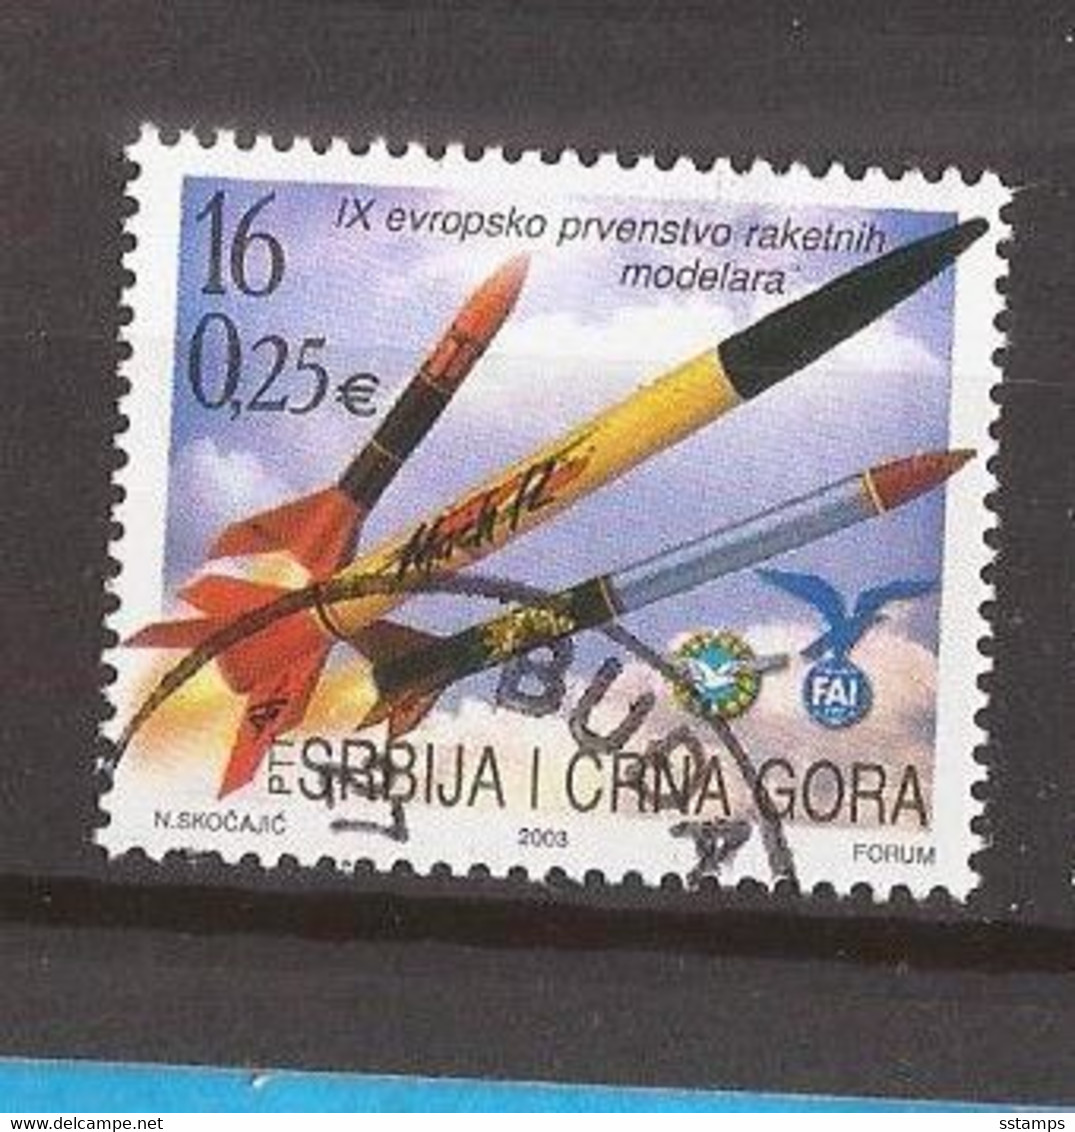 2003  3142  RAKETEN JUGOSLAVIJA JUGOSLAWIEN SRBIJA SERBIEN CRNA GORA MONTENEGRO  EUROPA RAKETENMODELLBAU   USED - Used Stamps